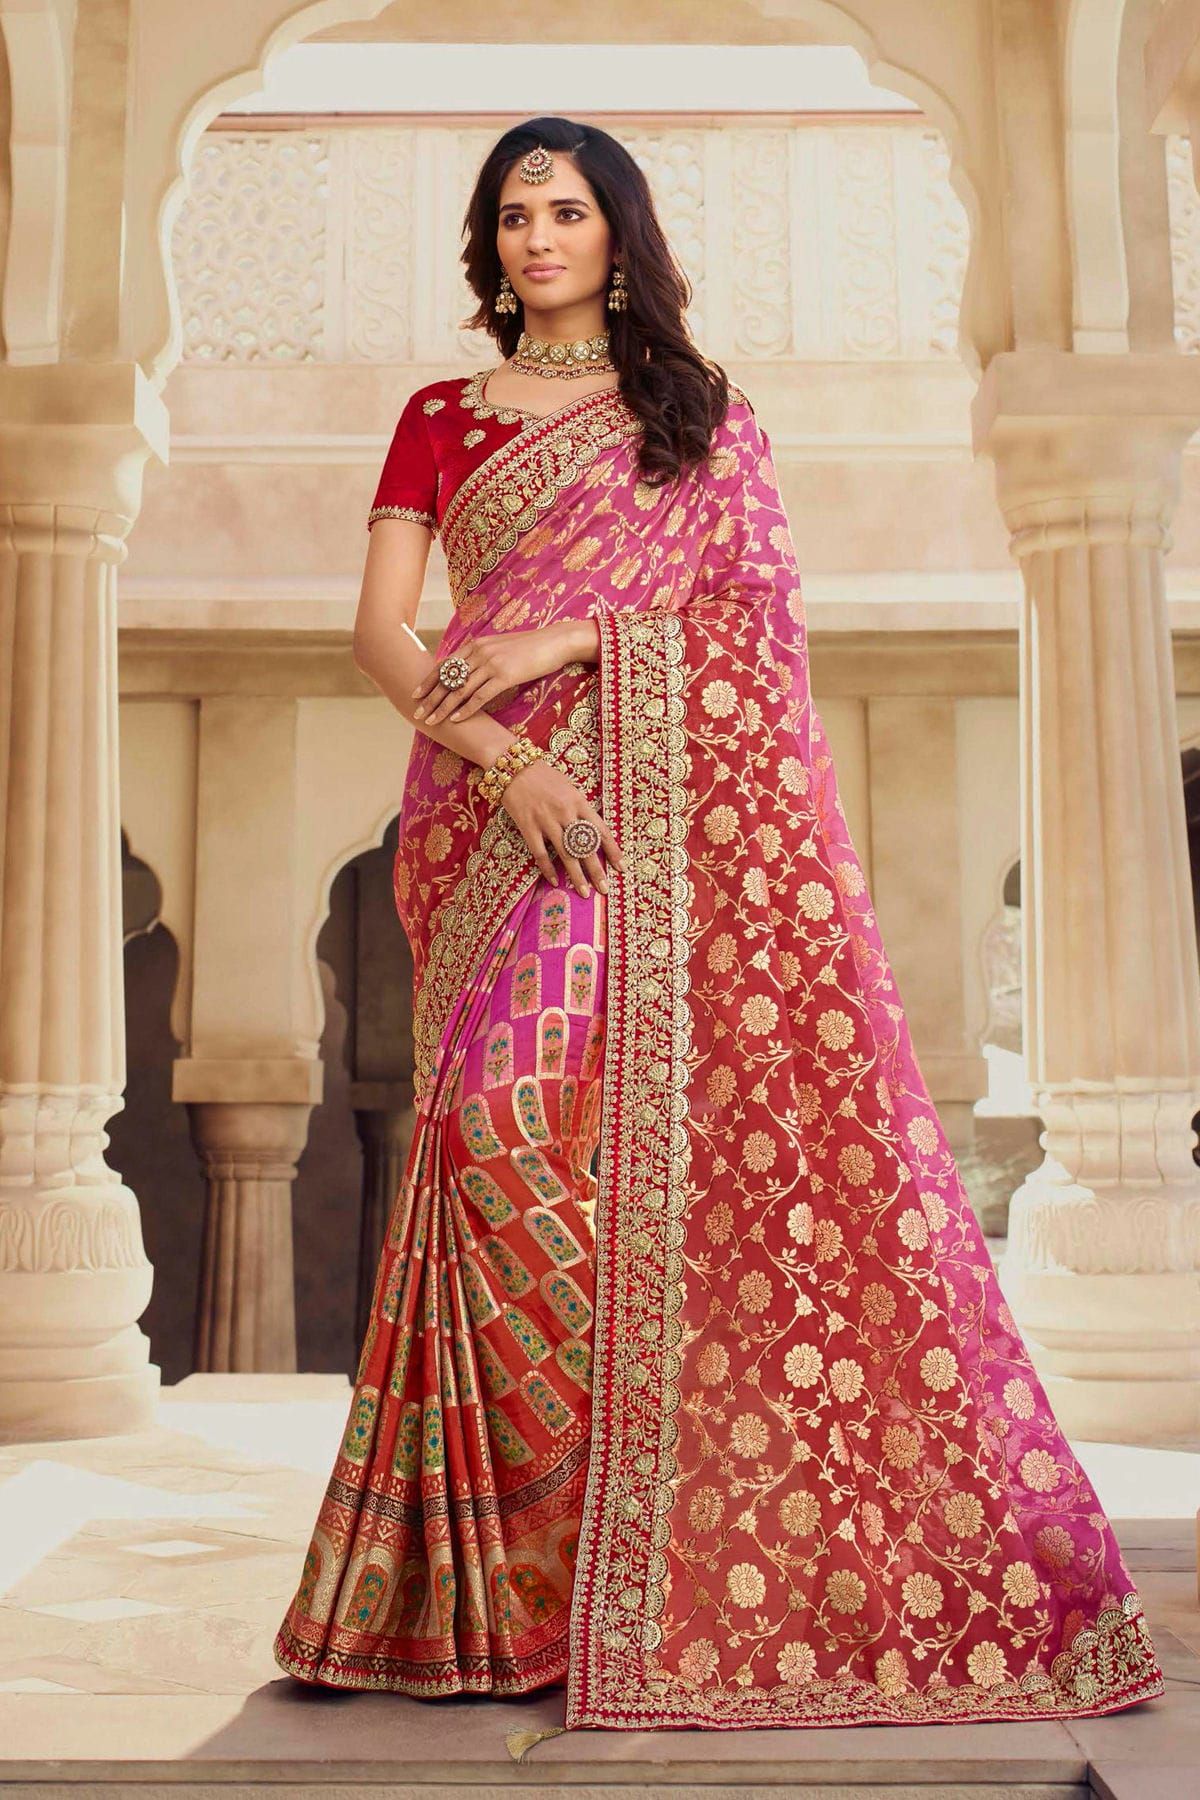 Vidya Balan looks ravishing in a red chanderi saree!